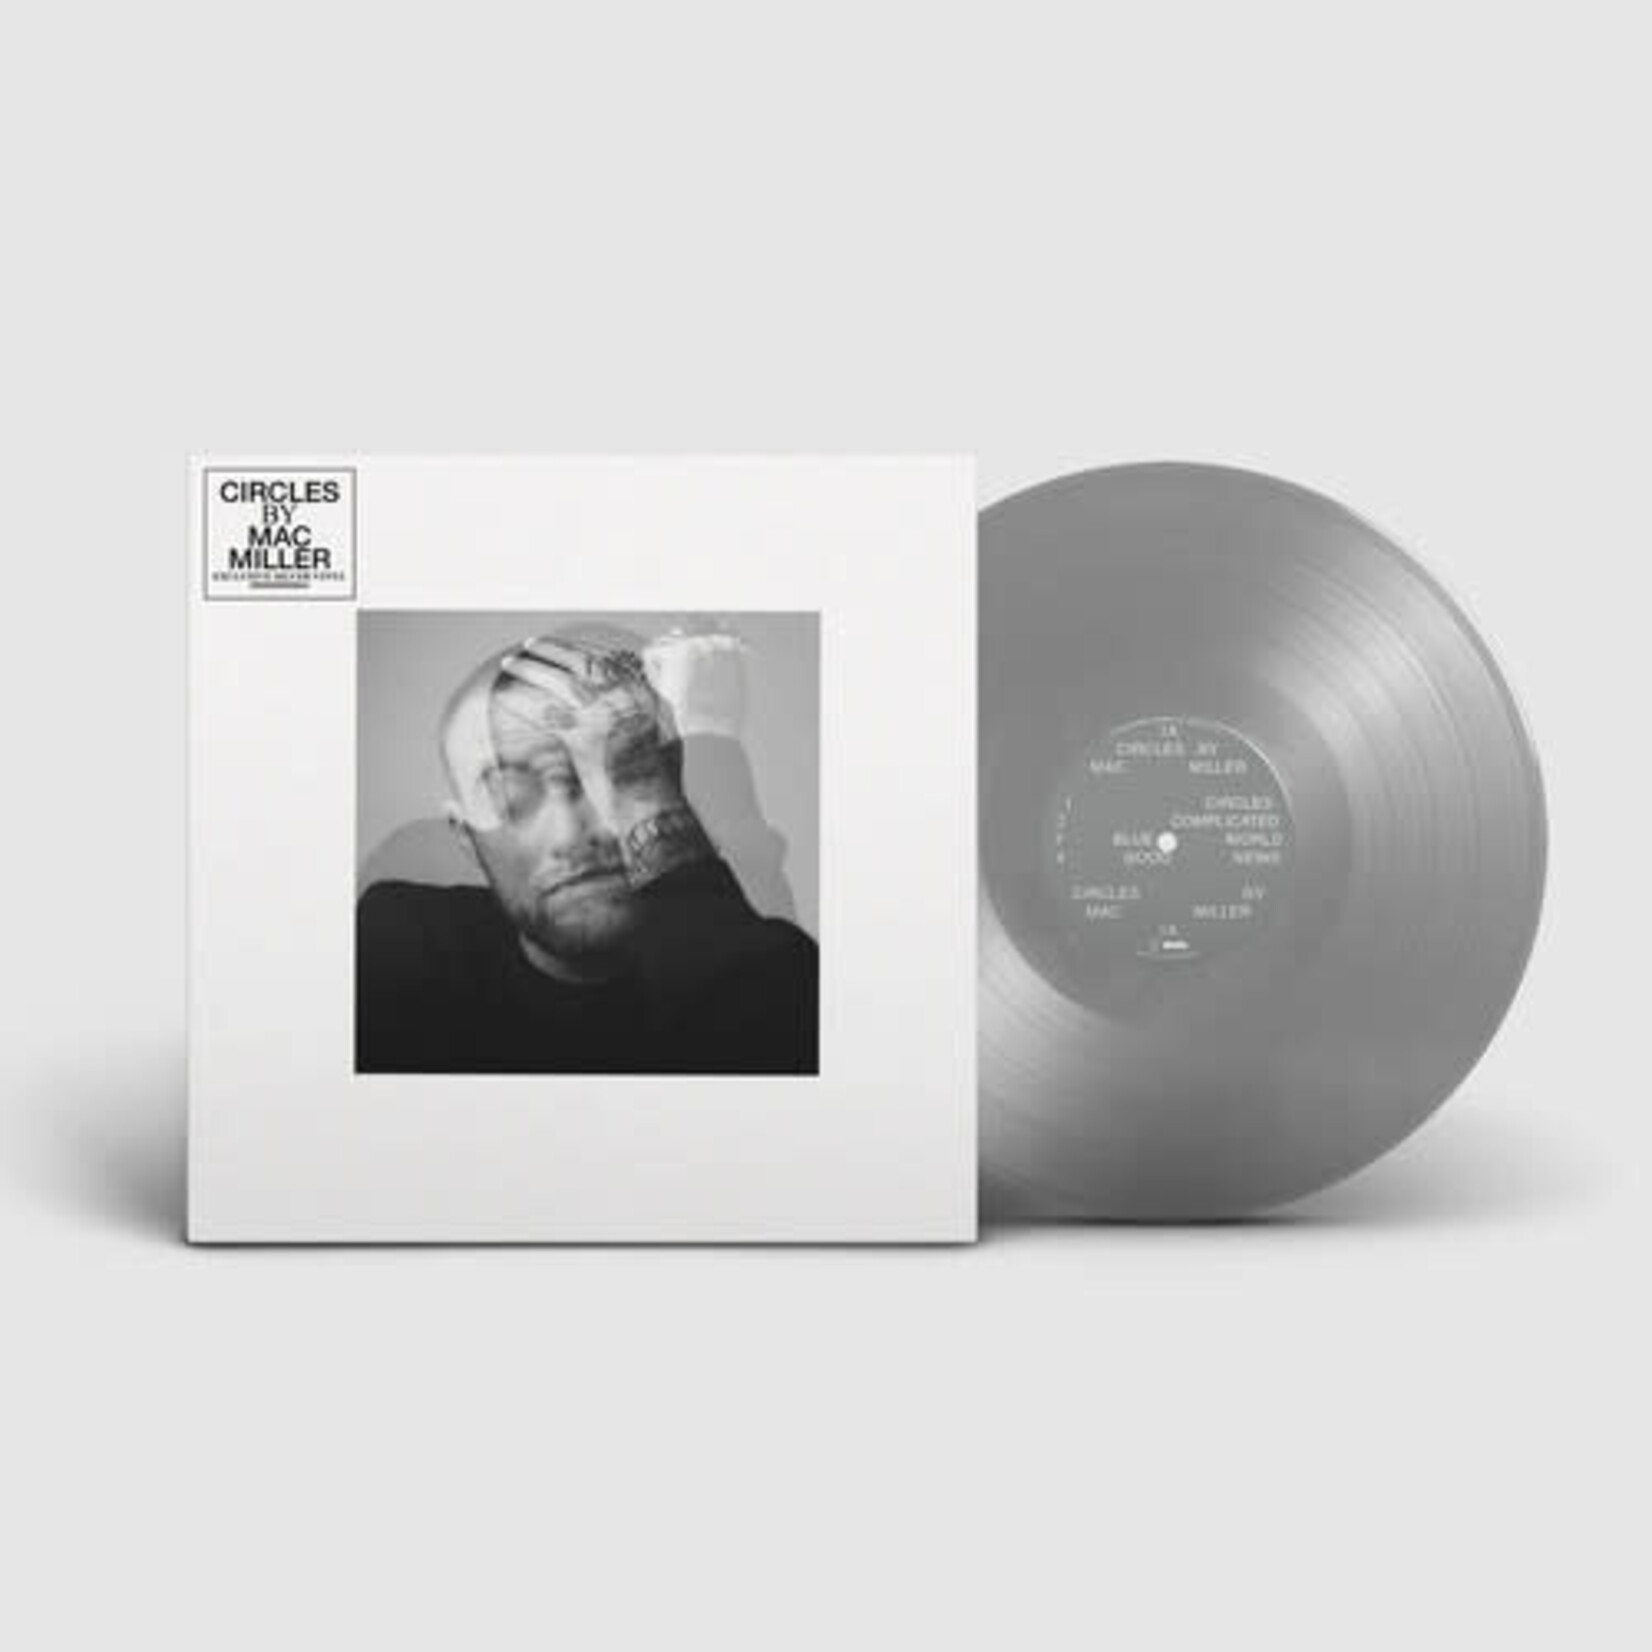 [New] Mac Miller - Circles (2LP, silver vinylm indie exclusive)